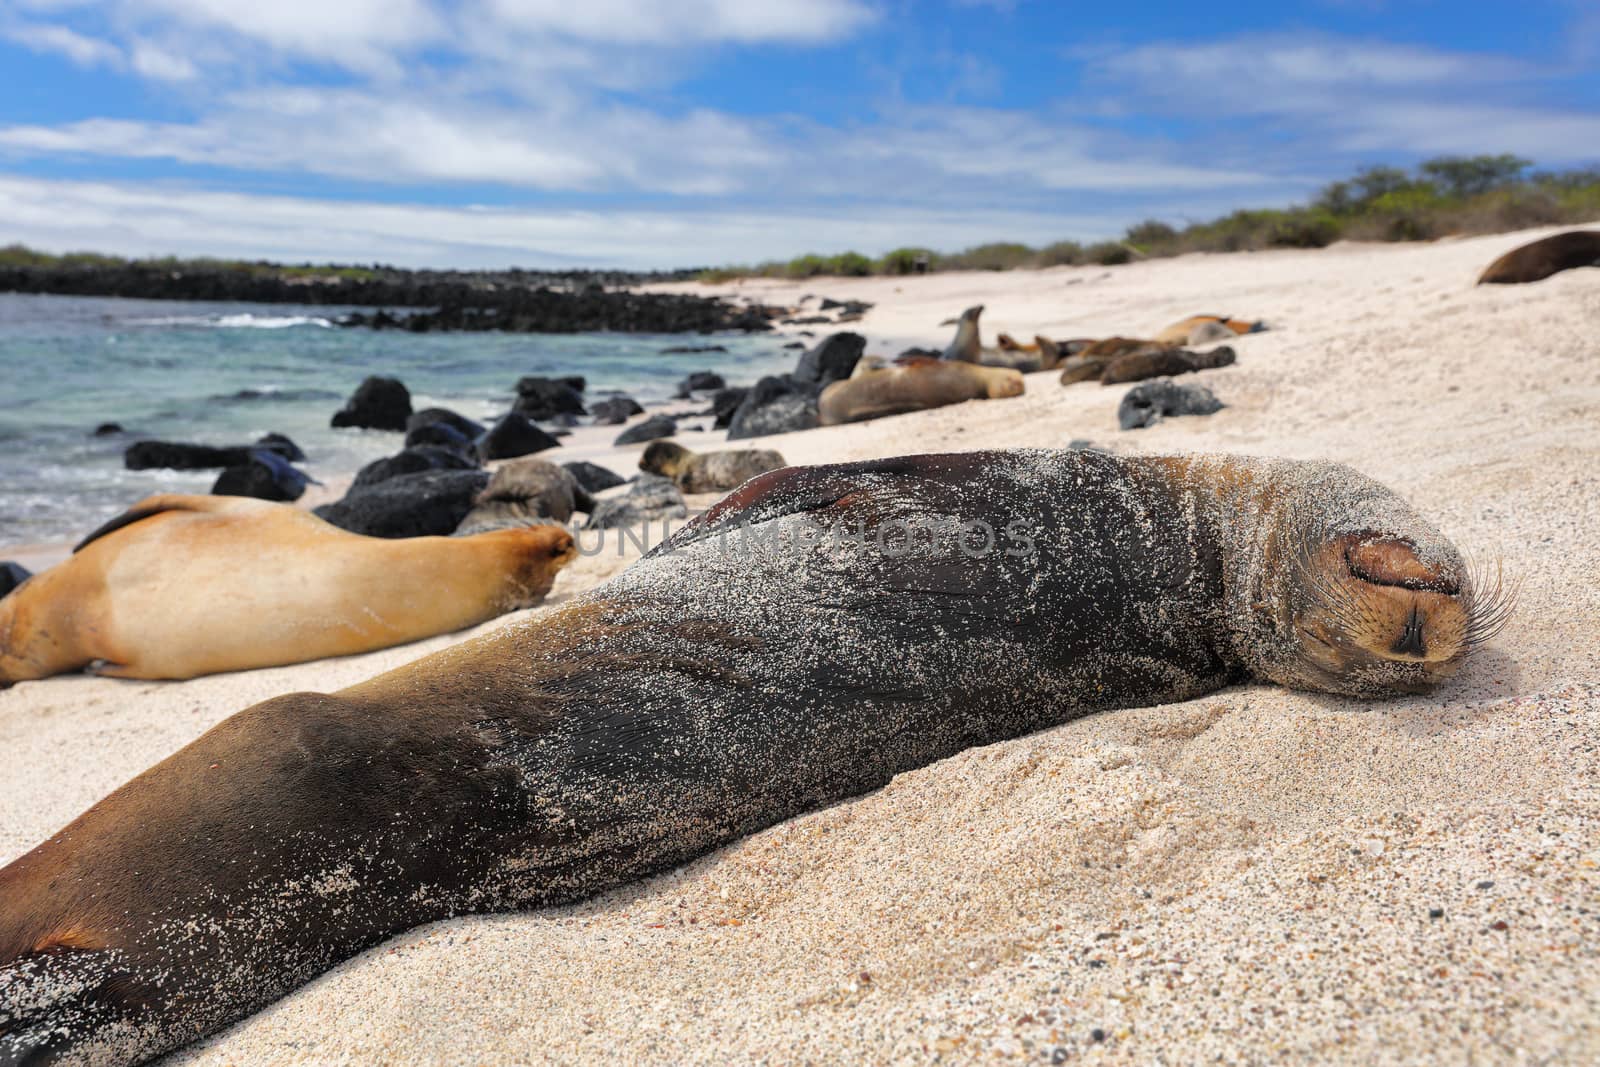 Galapagos Islands Animal wildlife nature: Sea Lions in sand lying on beach on Gardner Bay Beach, Espanola Island, Galapagos Islands, Ecuador, South America.